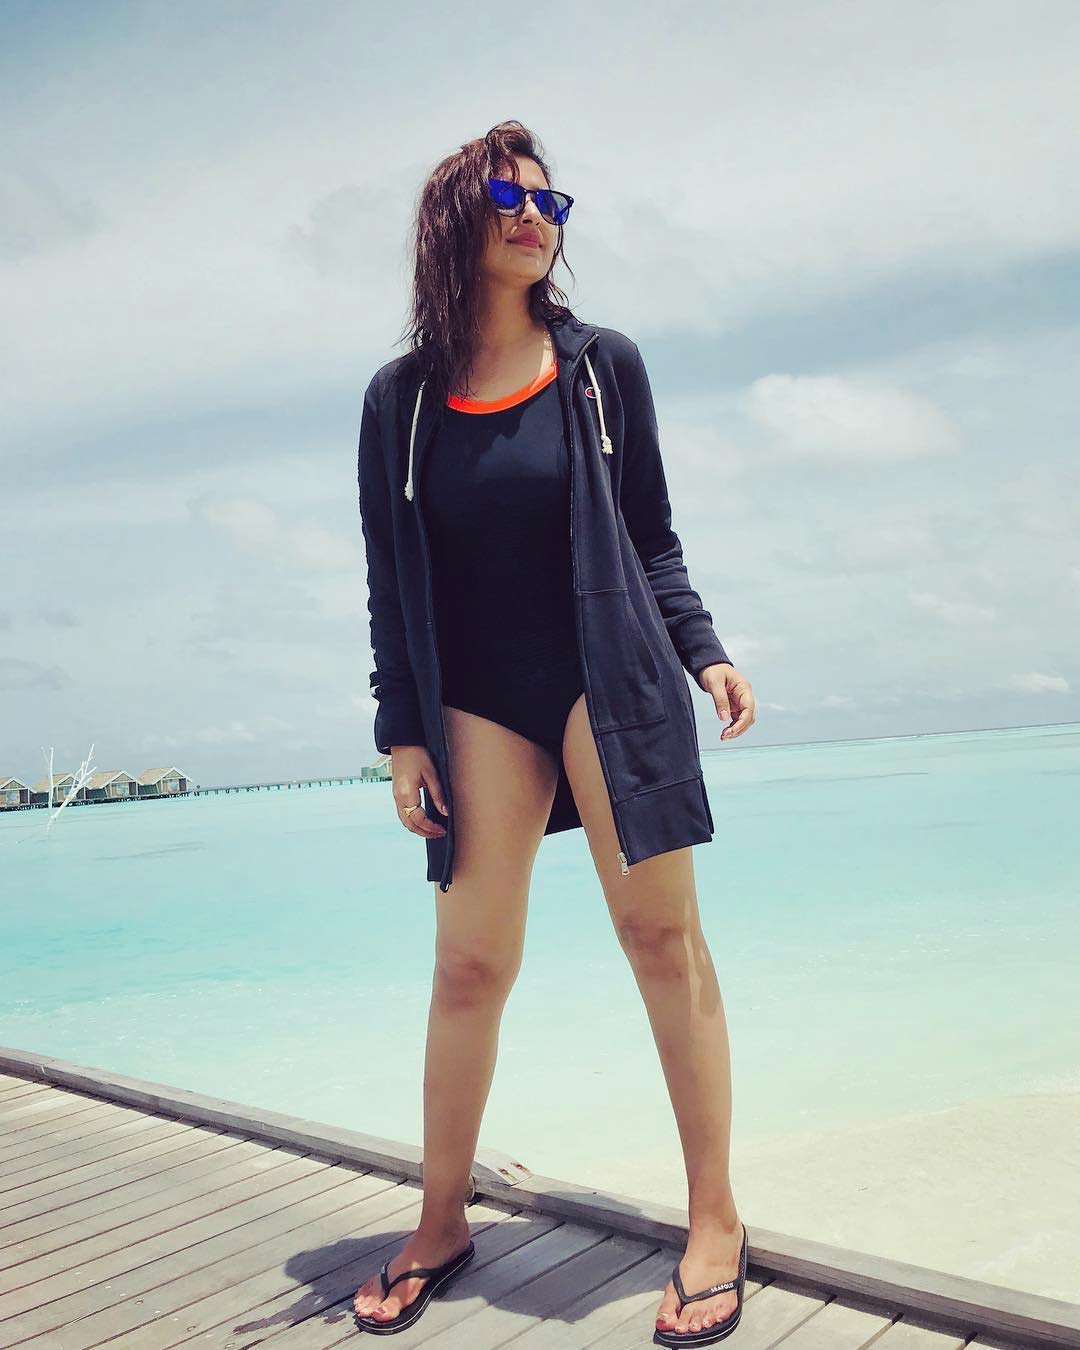 Parineeti Chopra is in Maldives